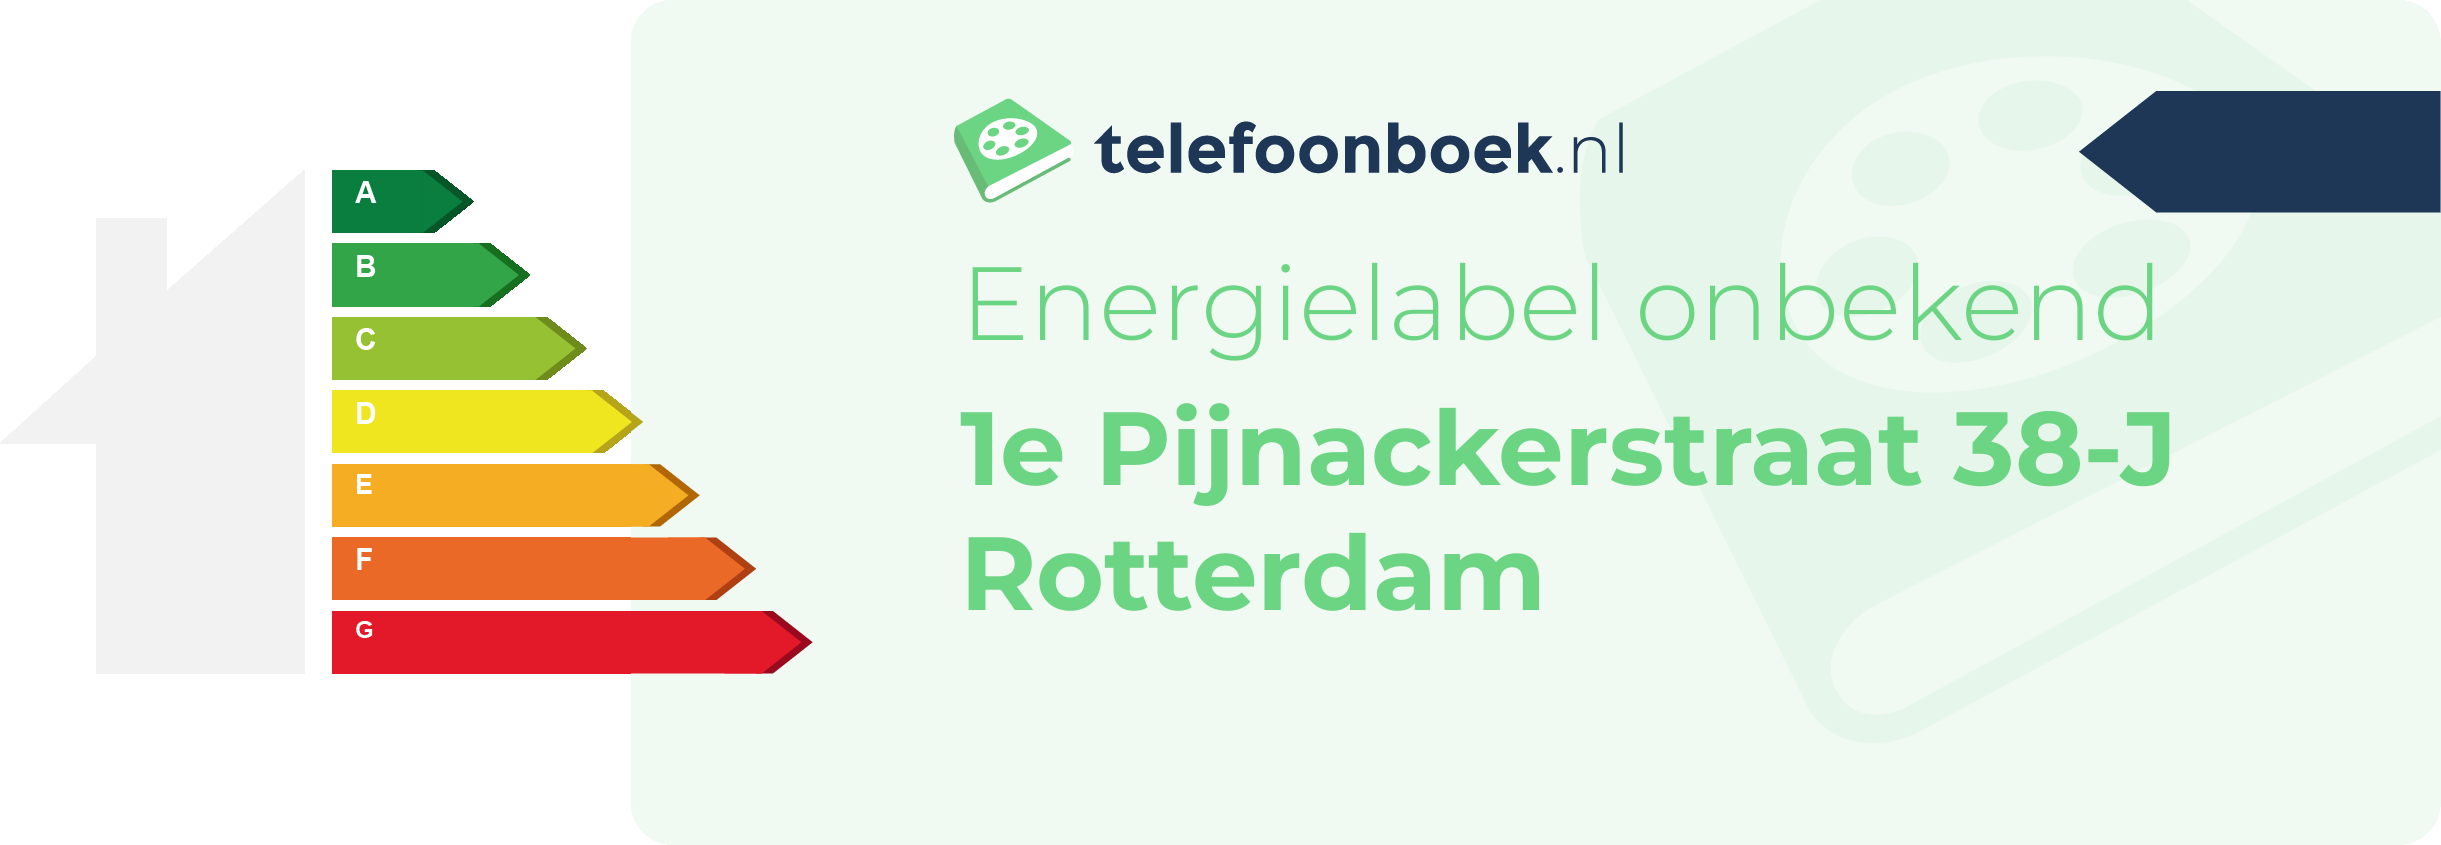 Energielabel 1e Pijnackerstraat 38-J Rotterdam